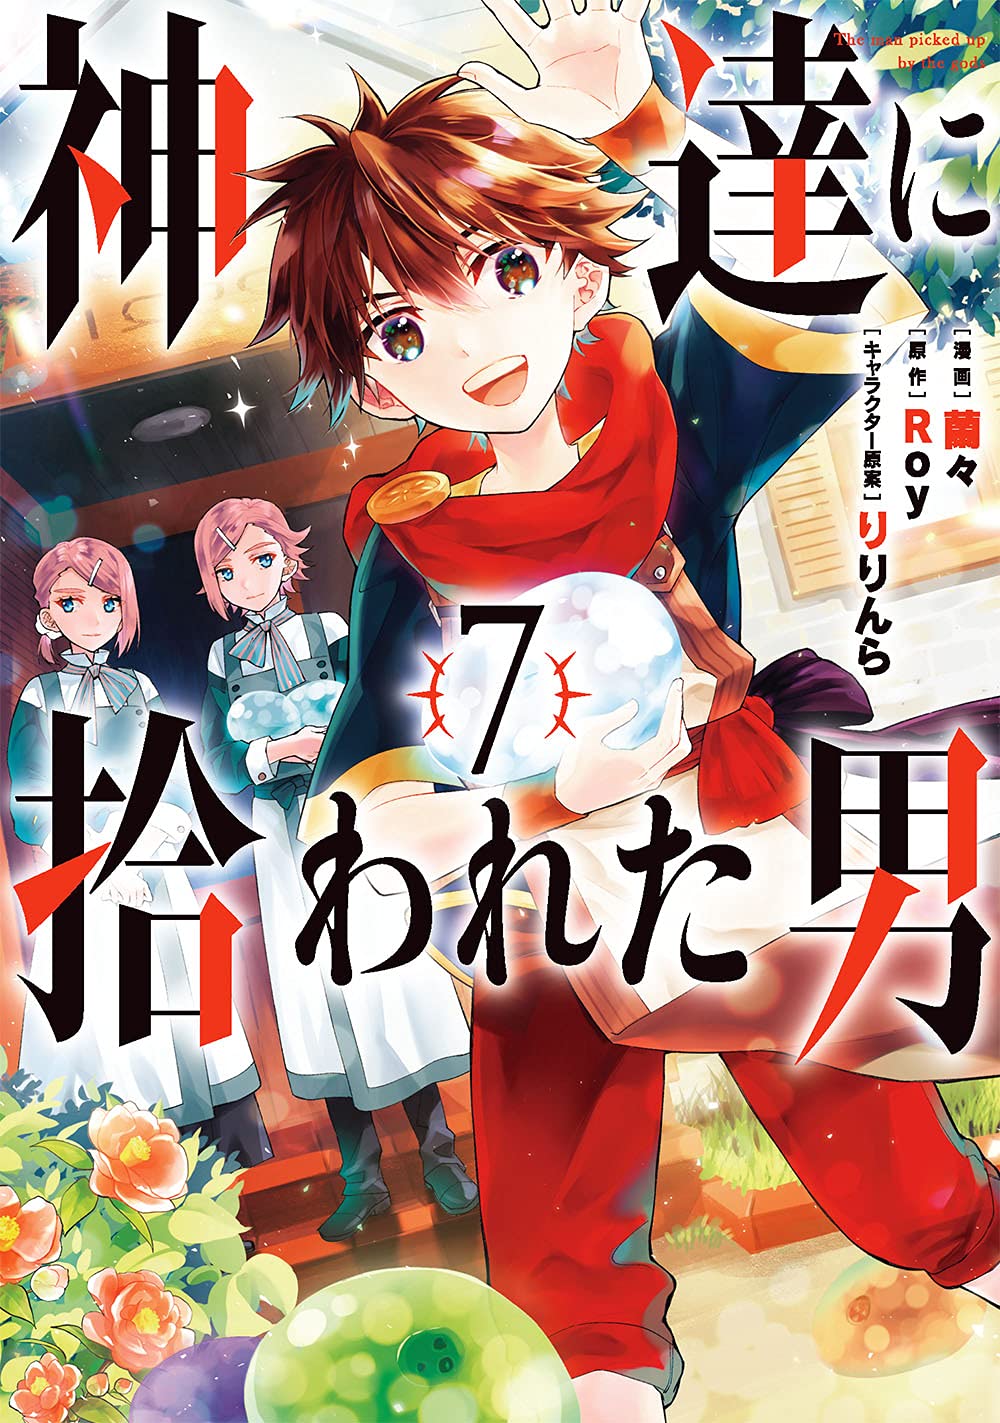 Manga Mogura RE on X: Kami-tachi ni Hirowareta Otoko series by Roy has  700,000 copies (including light novel & manga) in circulation.   / X